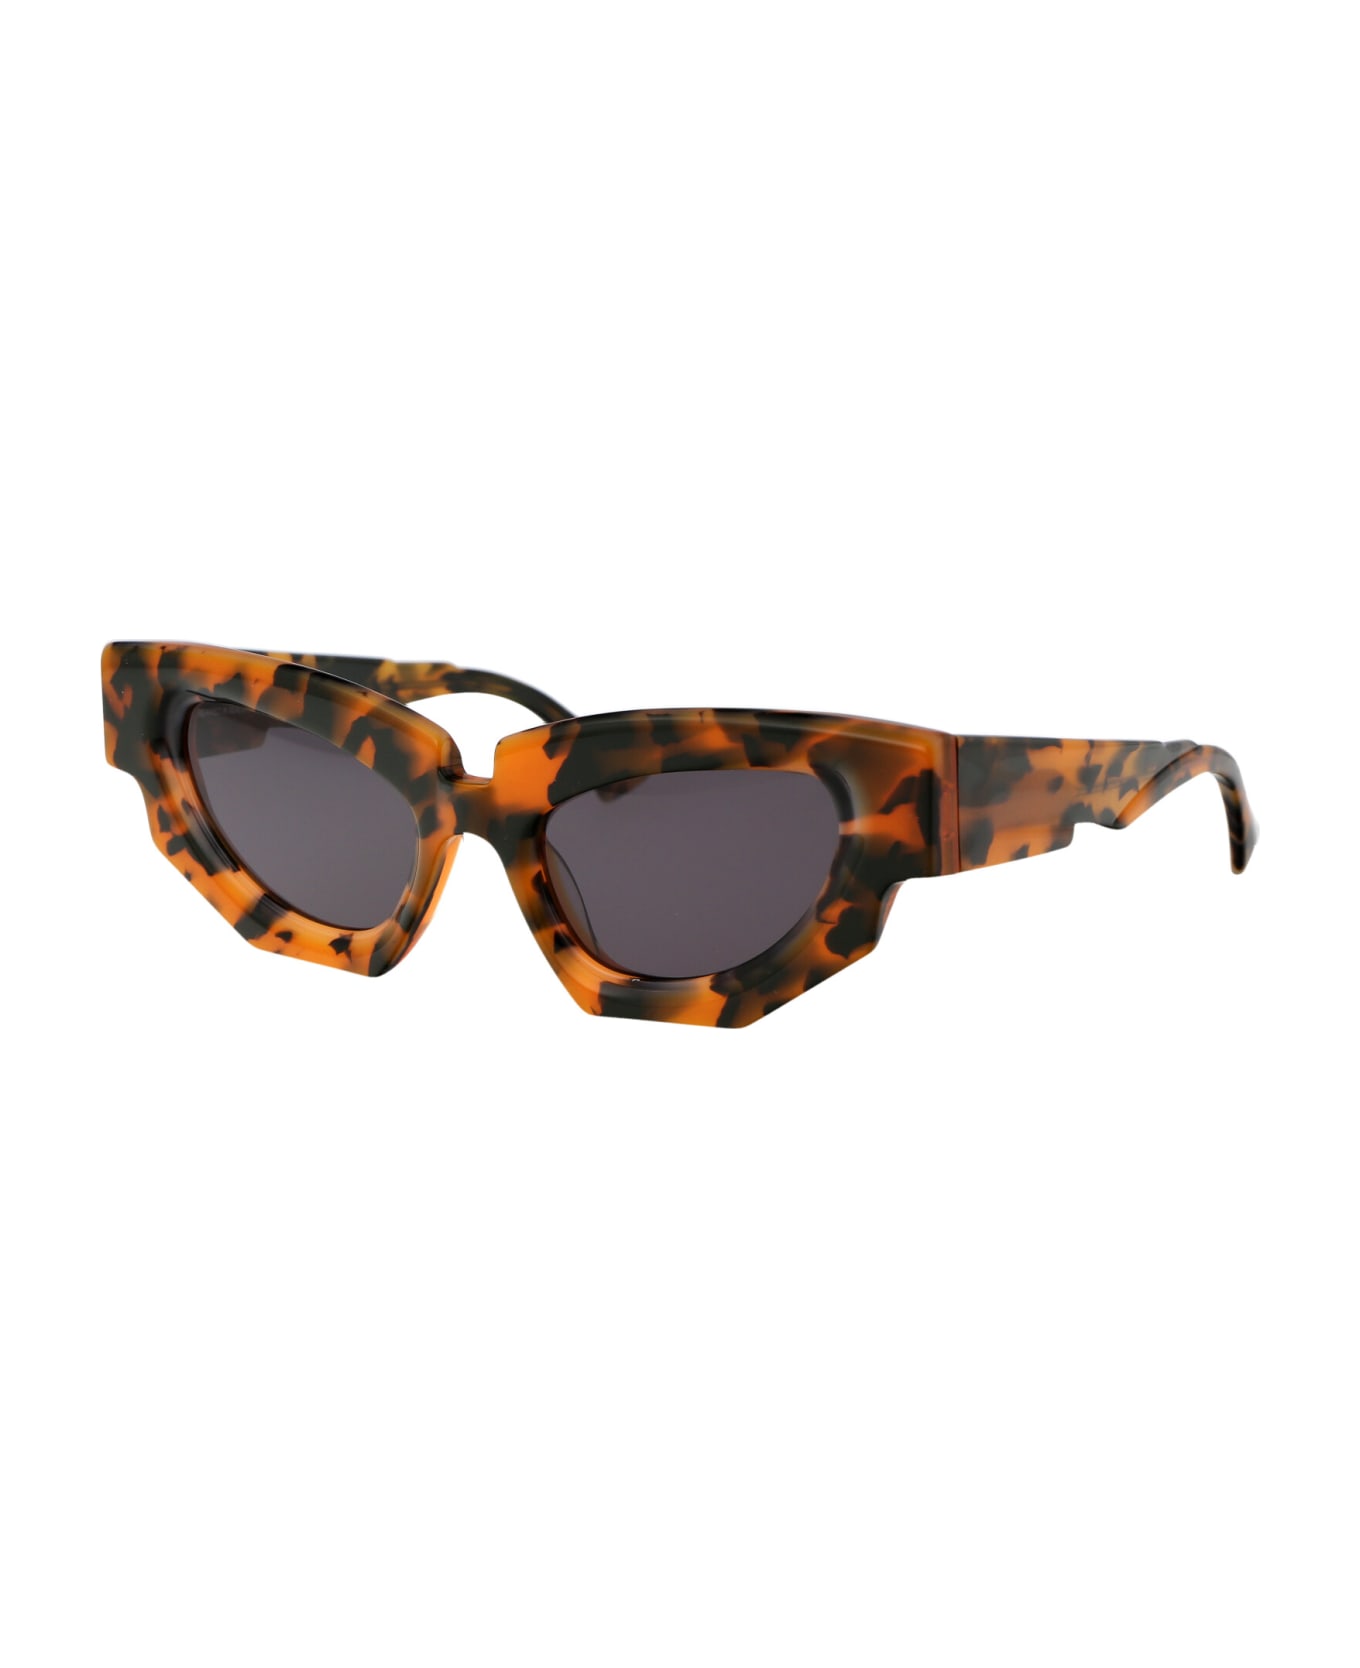 Kuboraum Maske F5 Sunglasses - HOR 2grey